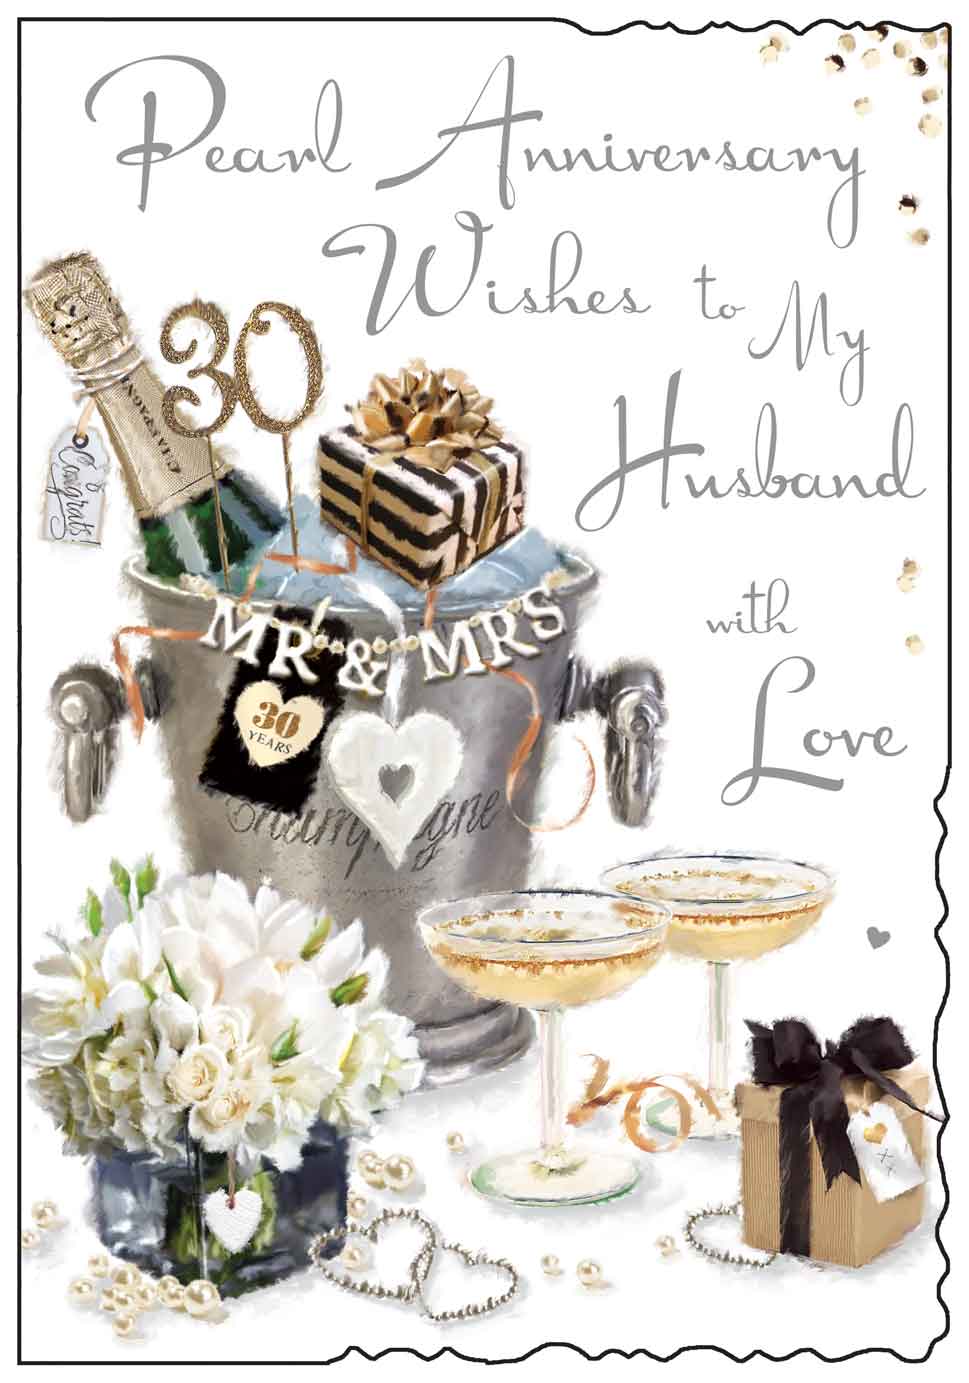 Husband 30th Wedding Anniversary Card - Champagne Toast To Us